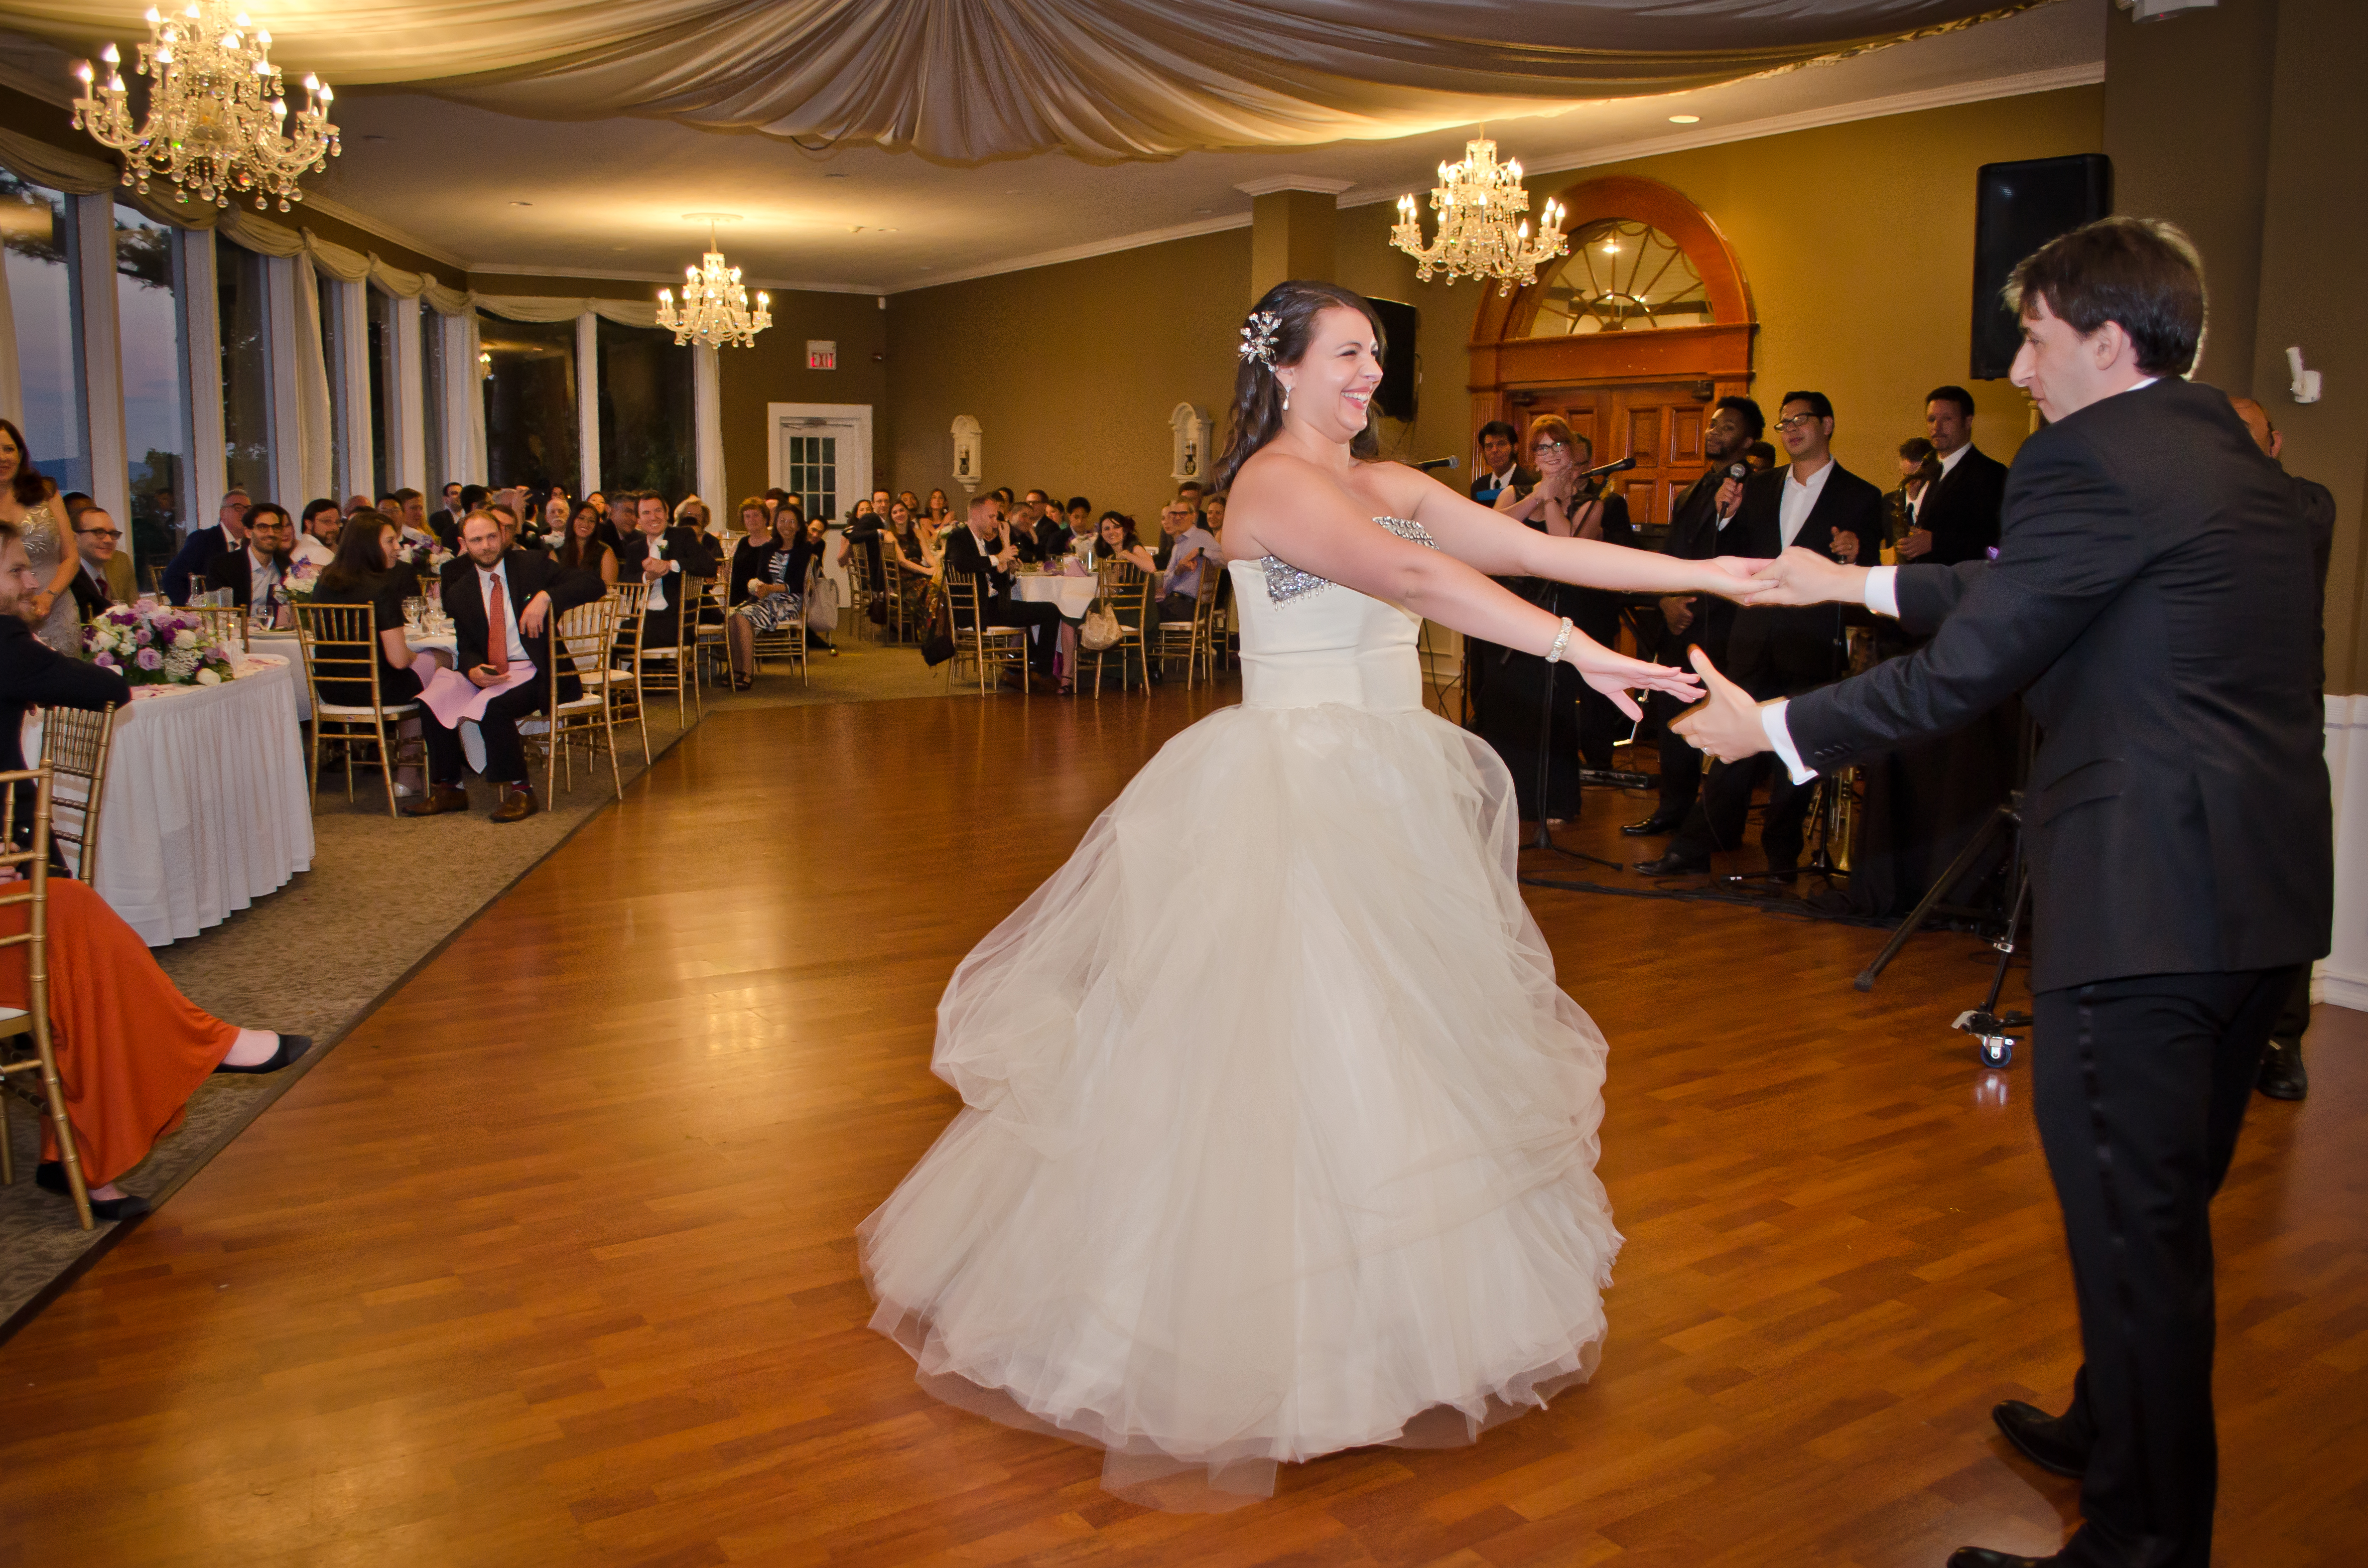 Aidan and Kaitlin dancing at their wedding.jpg